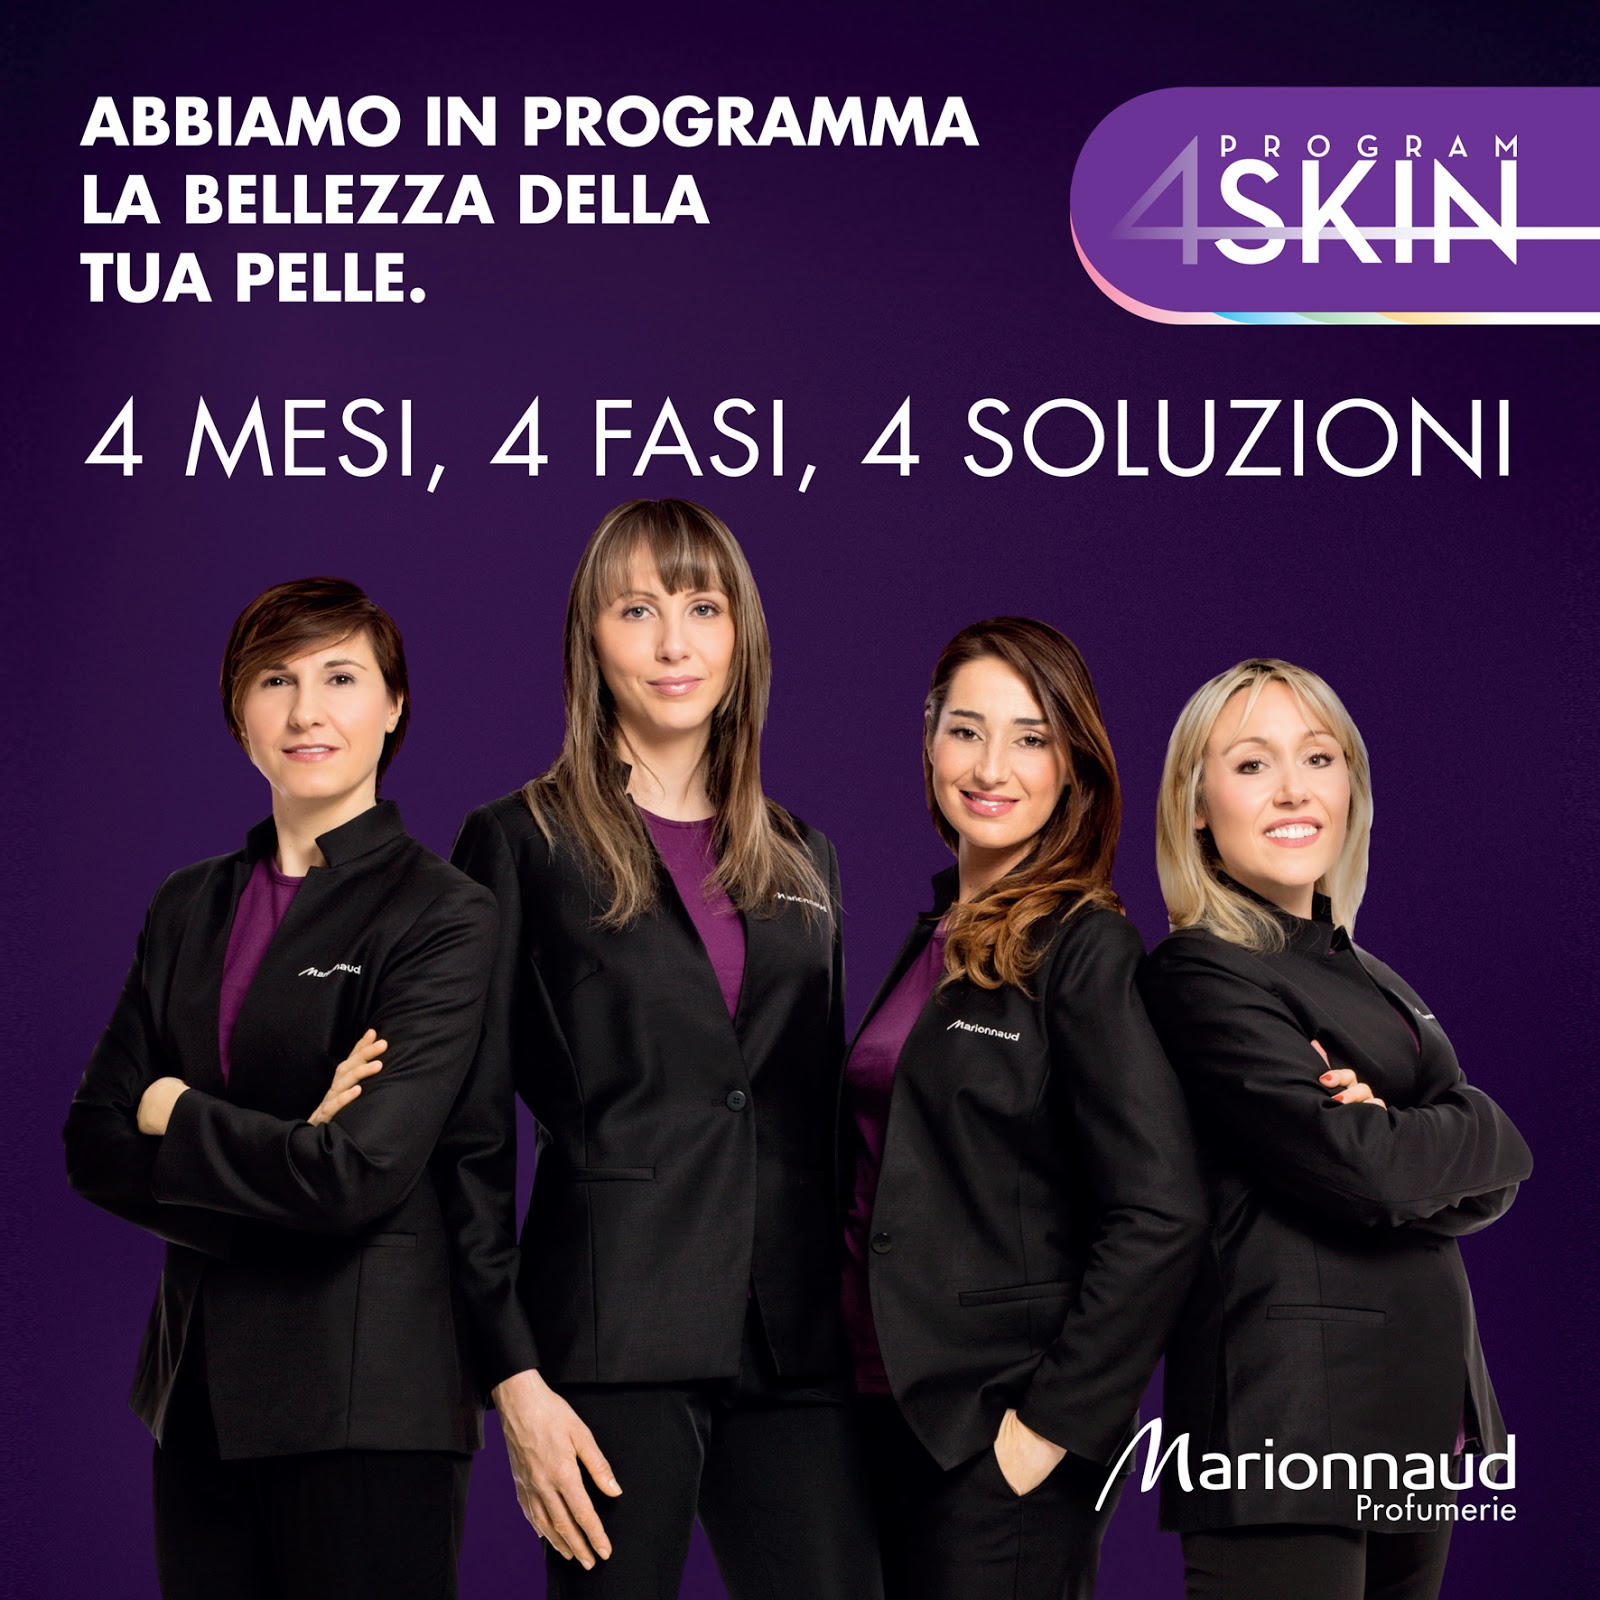 4 skin program. 4 mesi, 4 fasi, 4 soluzioni per la tua pelle